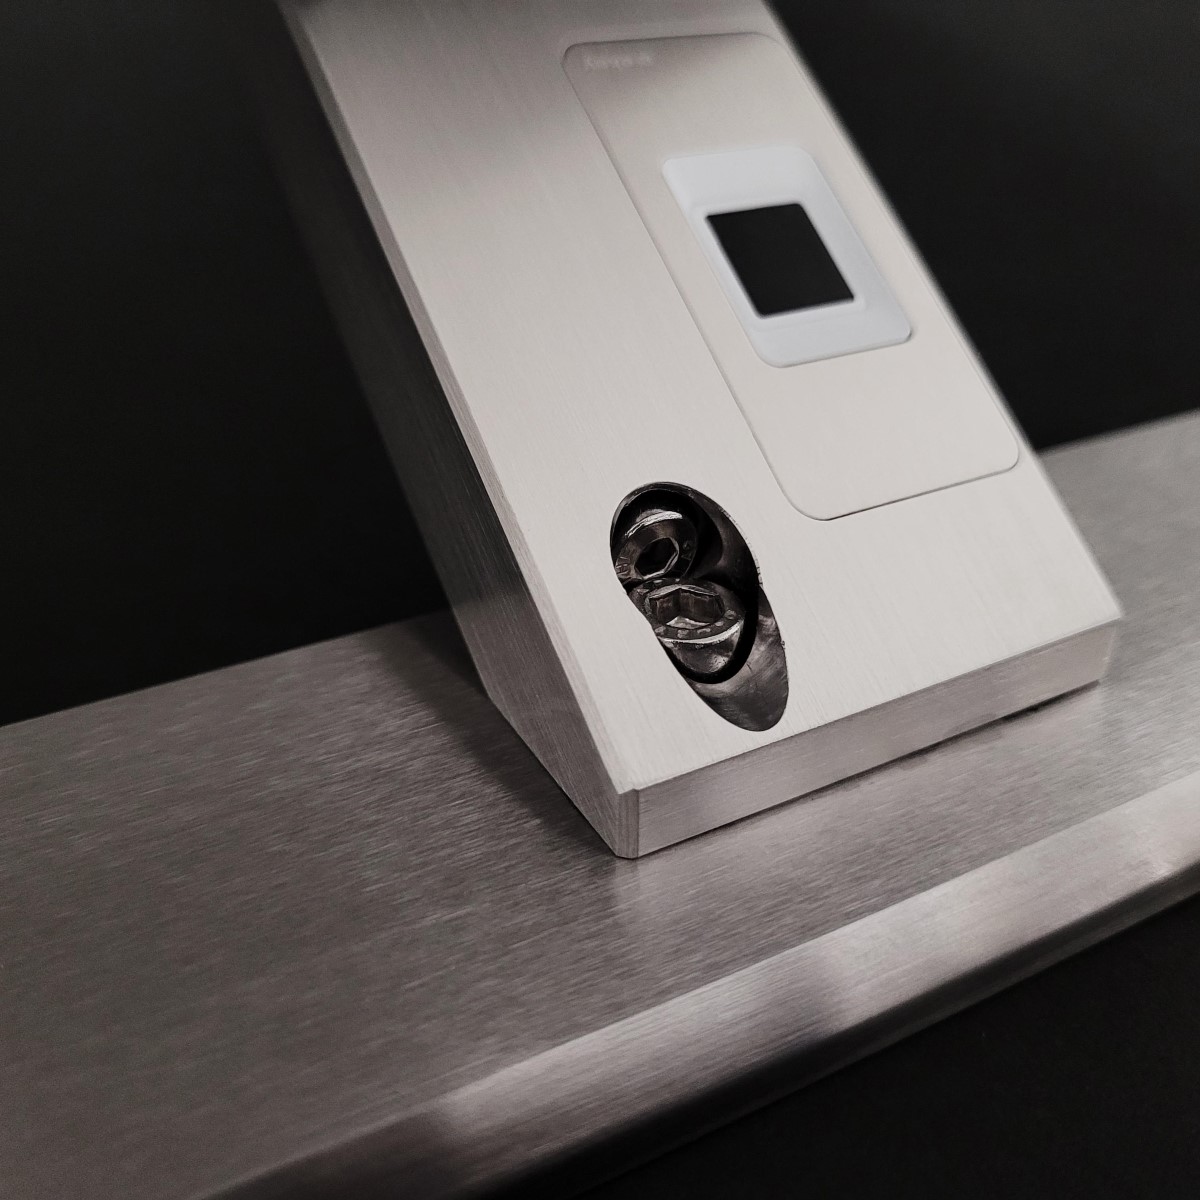 GrifFinger - čitalnik prstnih odtisov ročaj za vhodna vrata - fingerprint scanner door handle - Fingerabdruckleser Haustürgriffe - Griffing 1